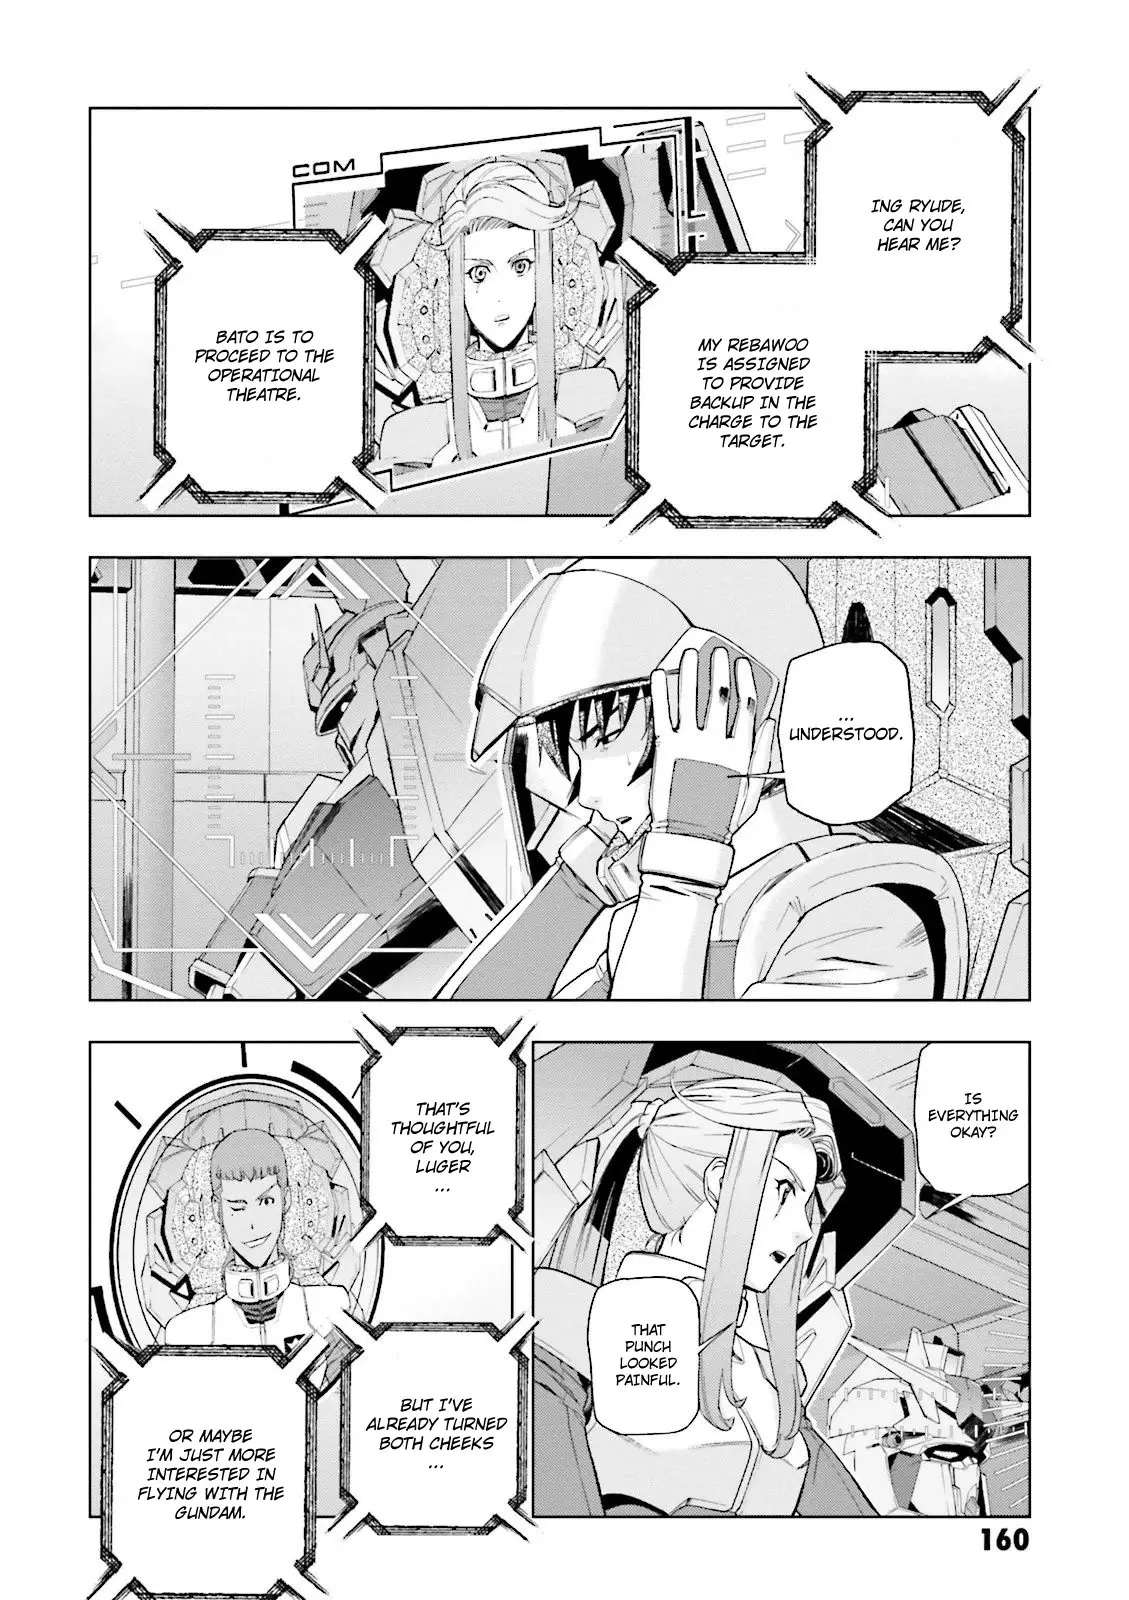 Kidou Senshi Gundam U.c. 0094 - Across The Sky - 12 page 3-889357c7